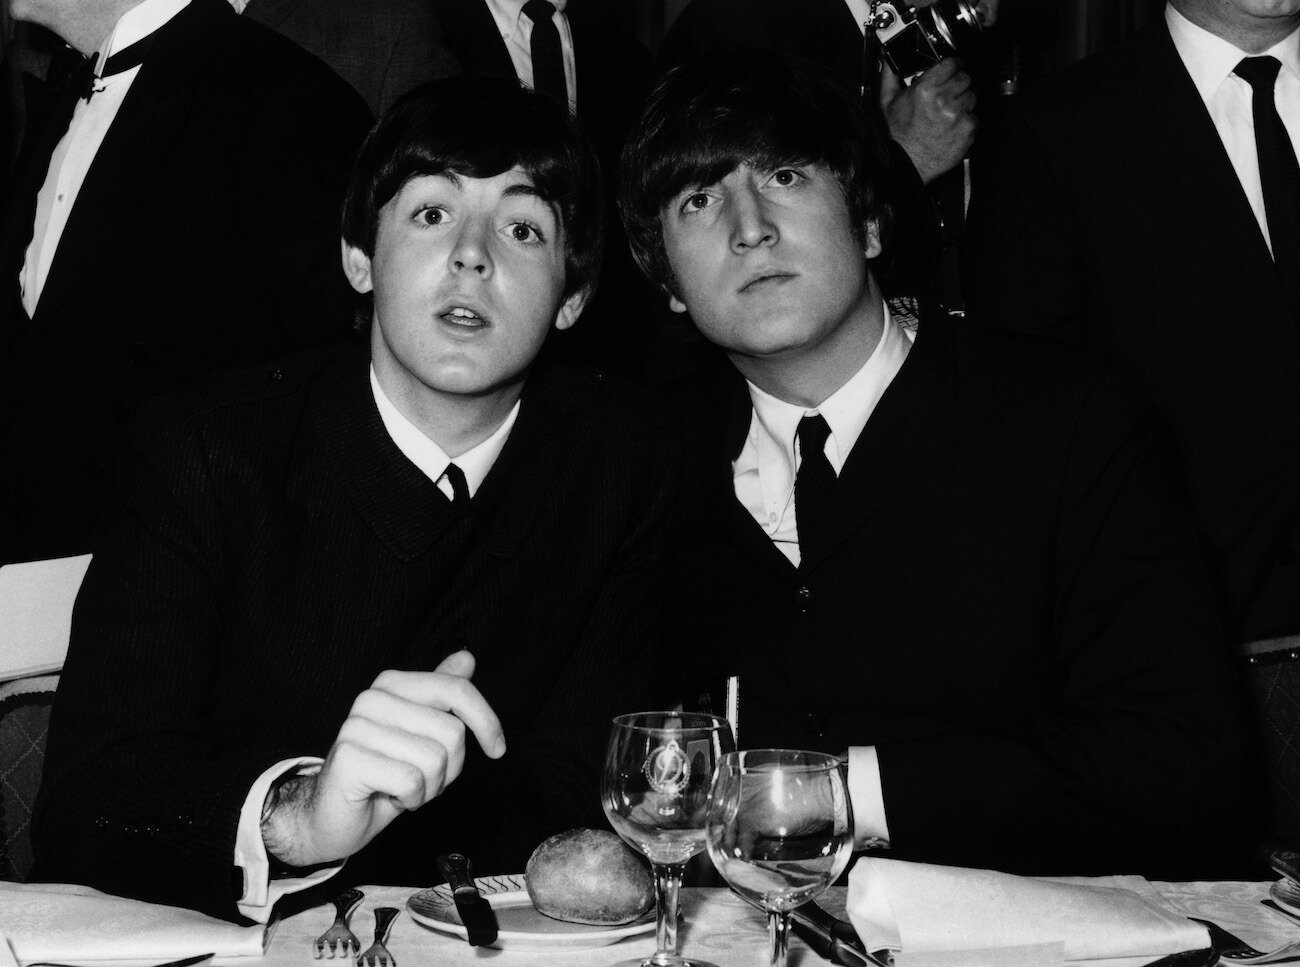 Paul McCartney and John Lennon at an awards show in 1964.